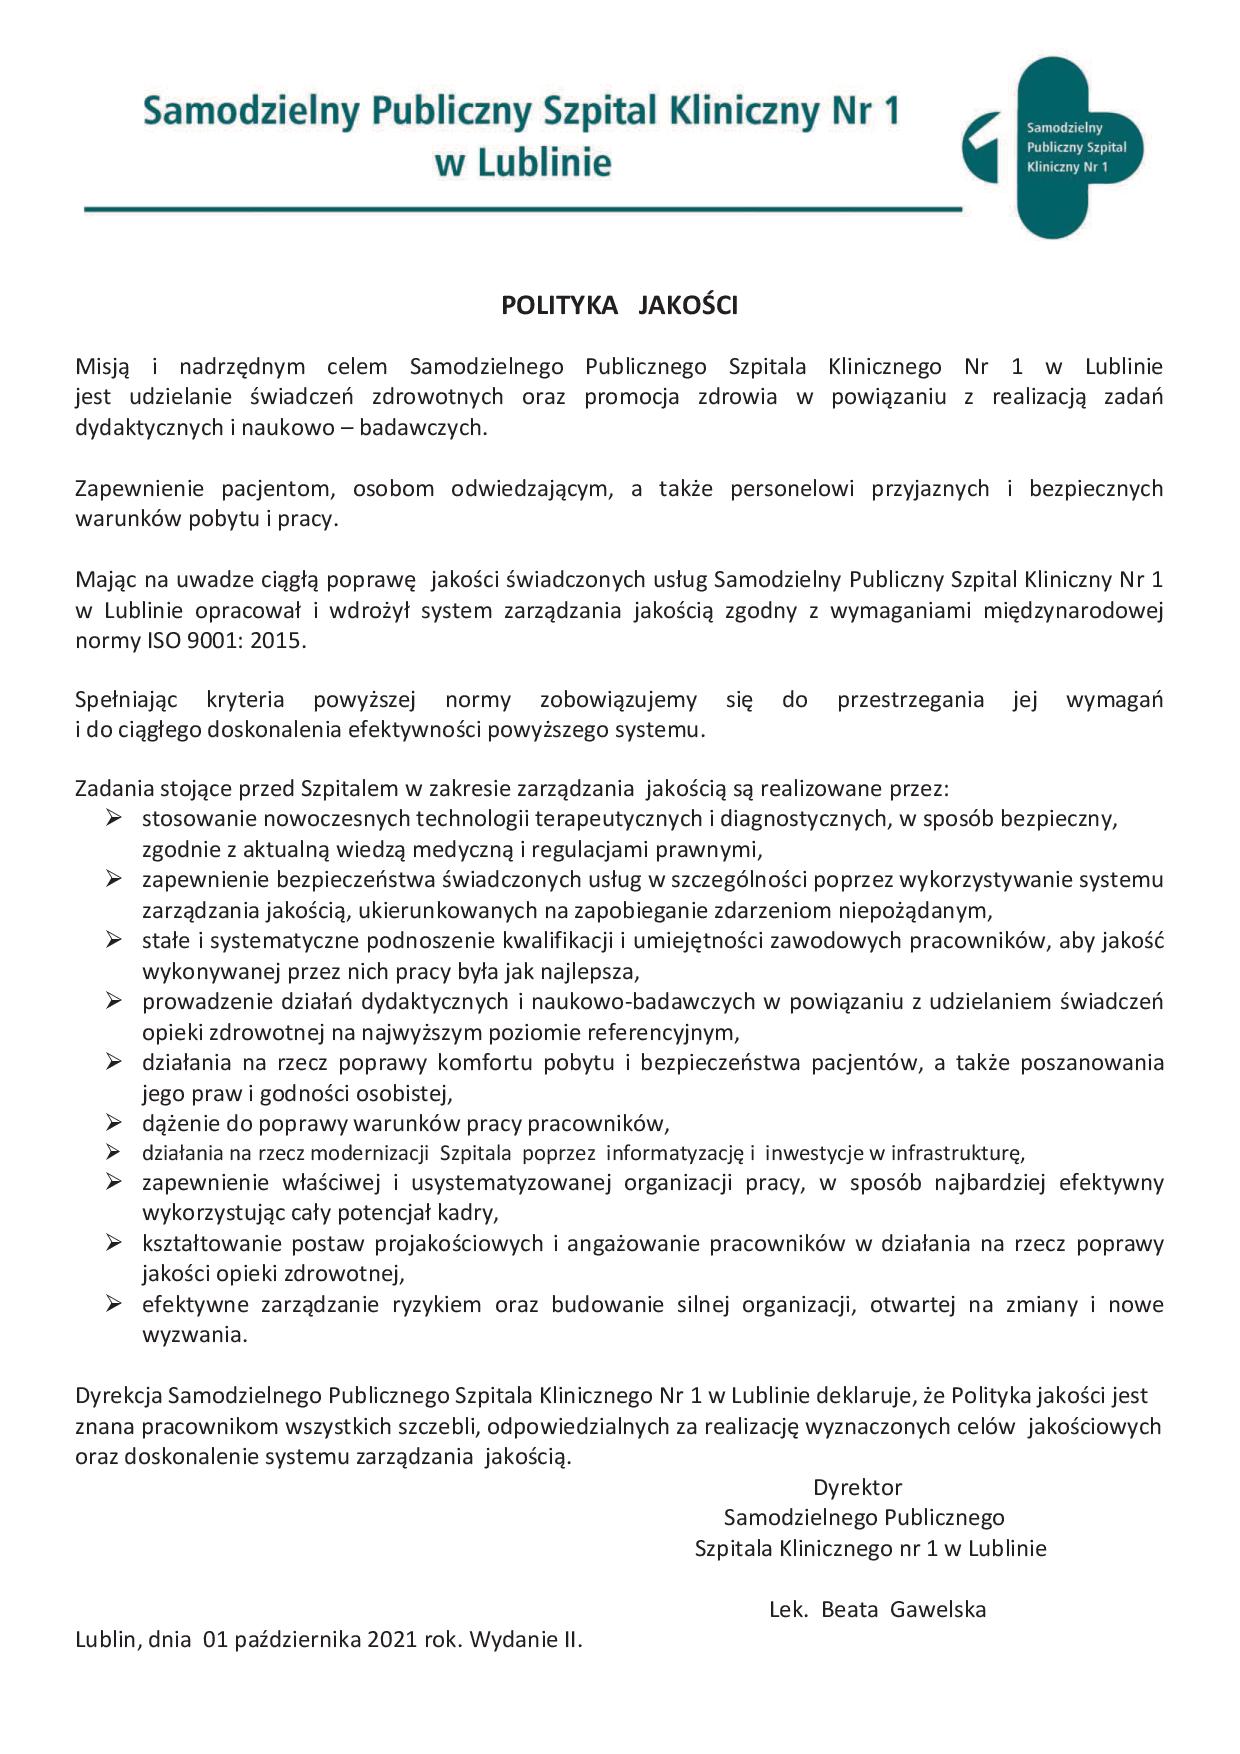 http://b.i.p.lublin.pl/spsk1/images/CertyfikatySzpitala%2FPolityka-Jakosci-2021.jpg